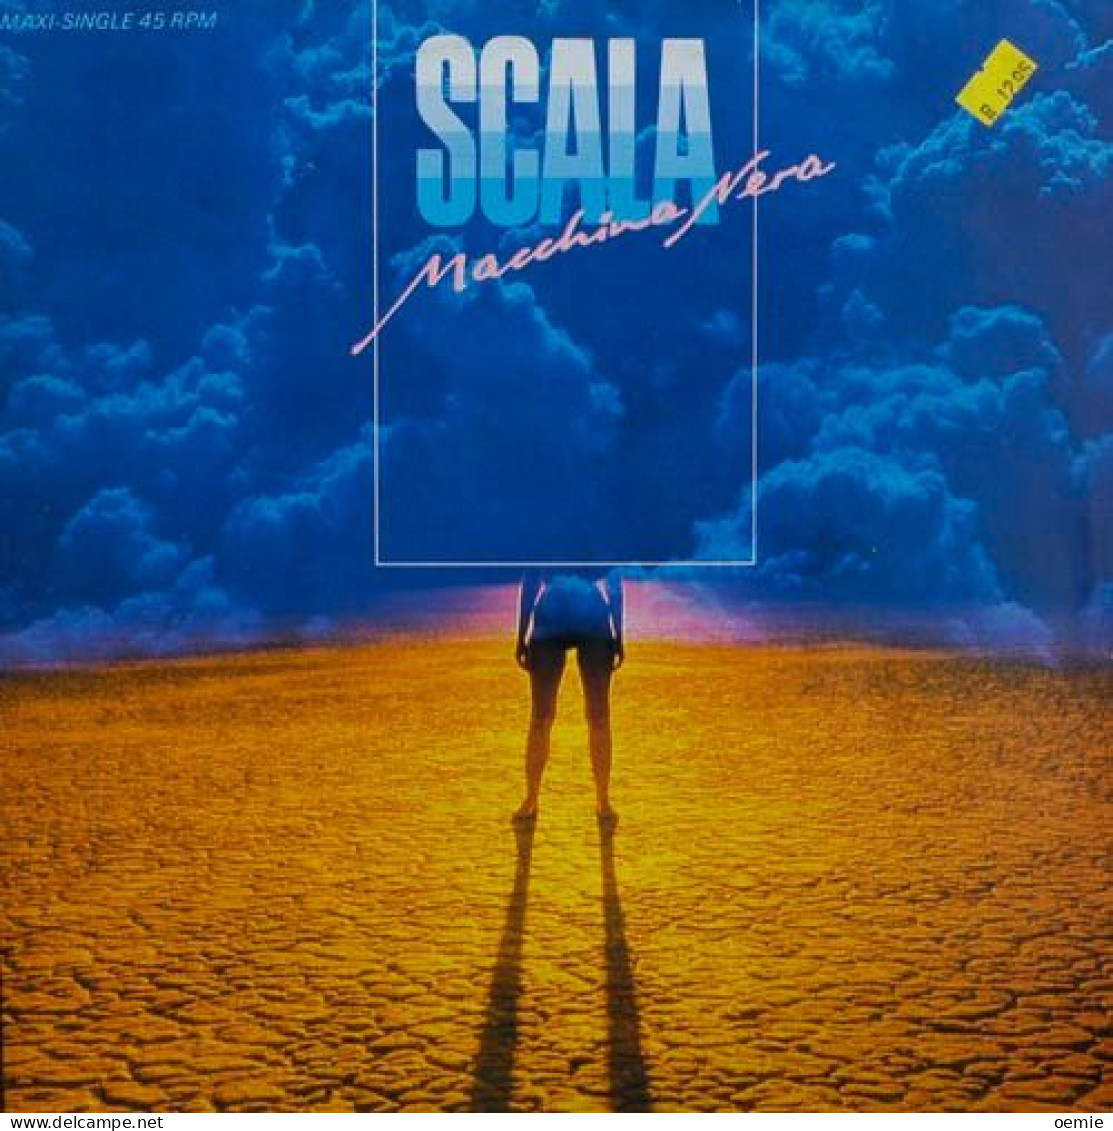 SCALA  MACHINE NERA - 45 Rpm - Maxi-Singles